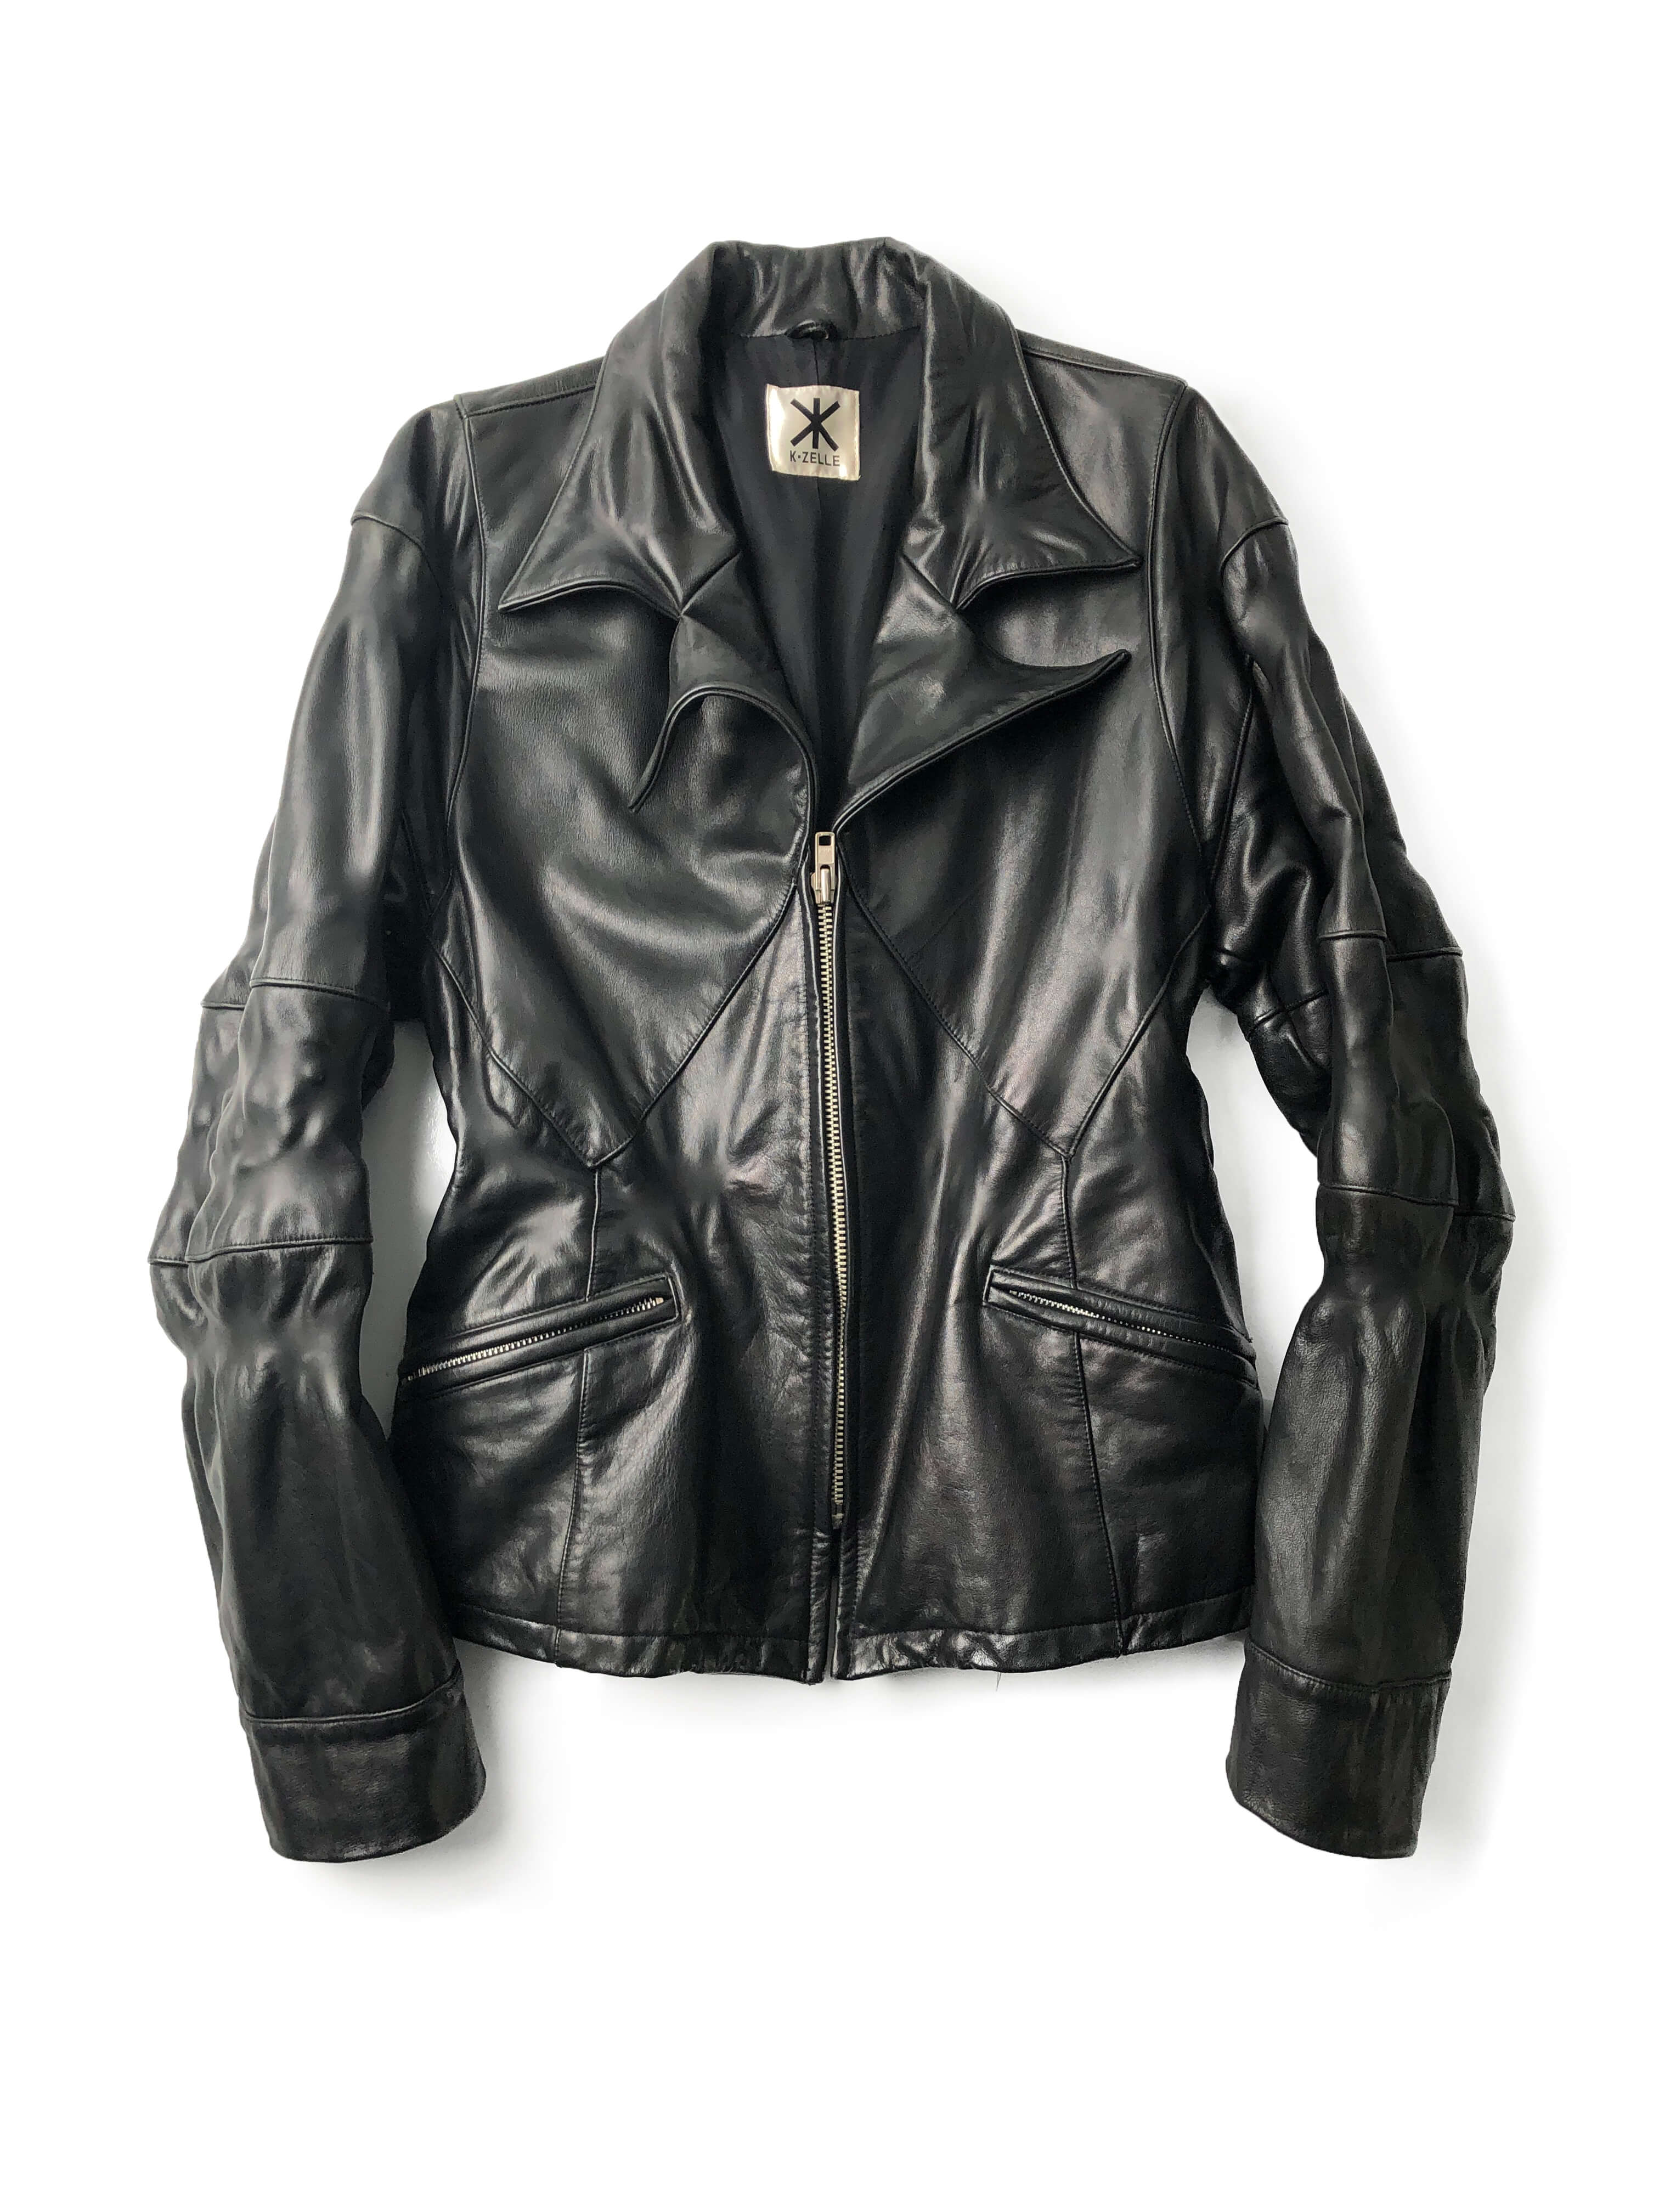 K・ZELLE leather jacket